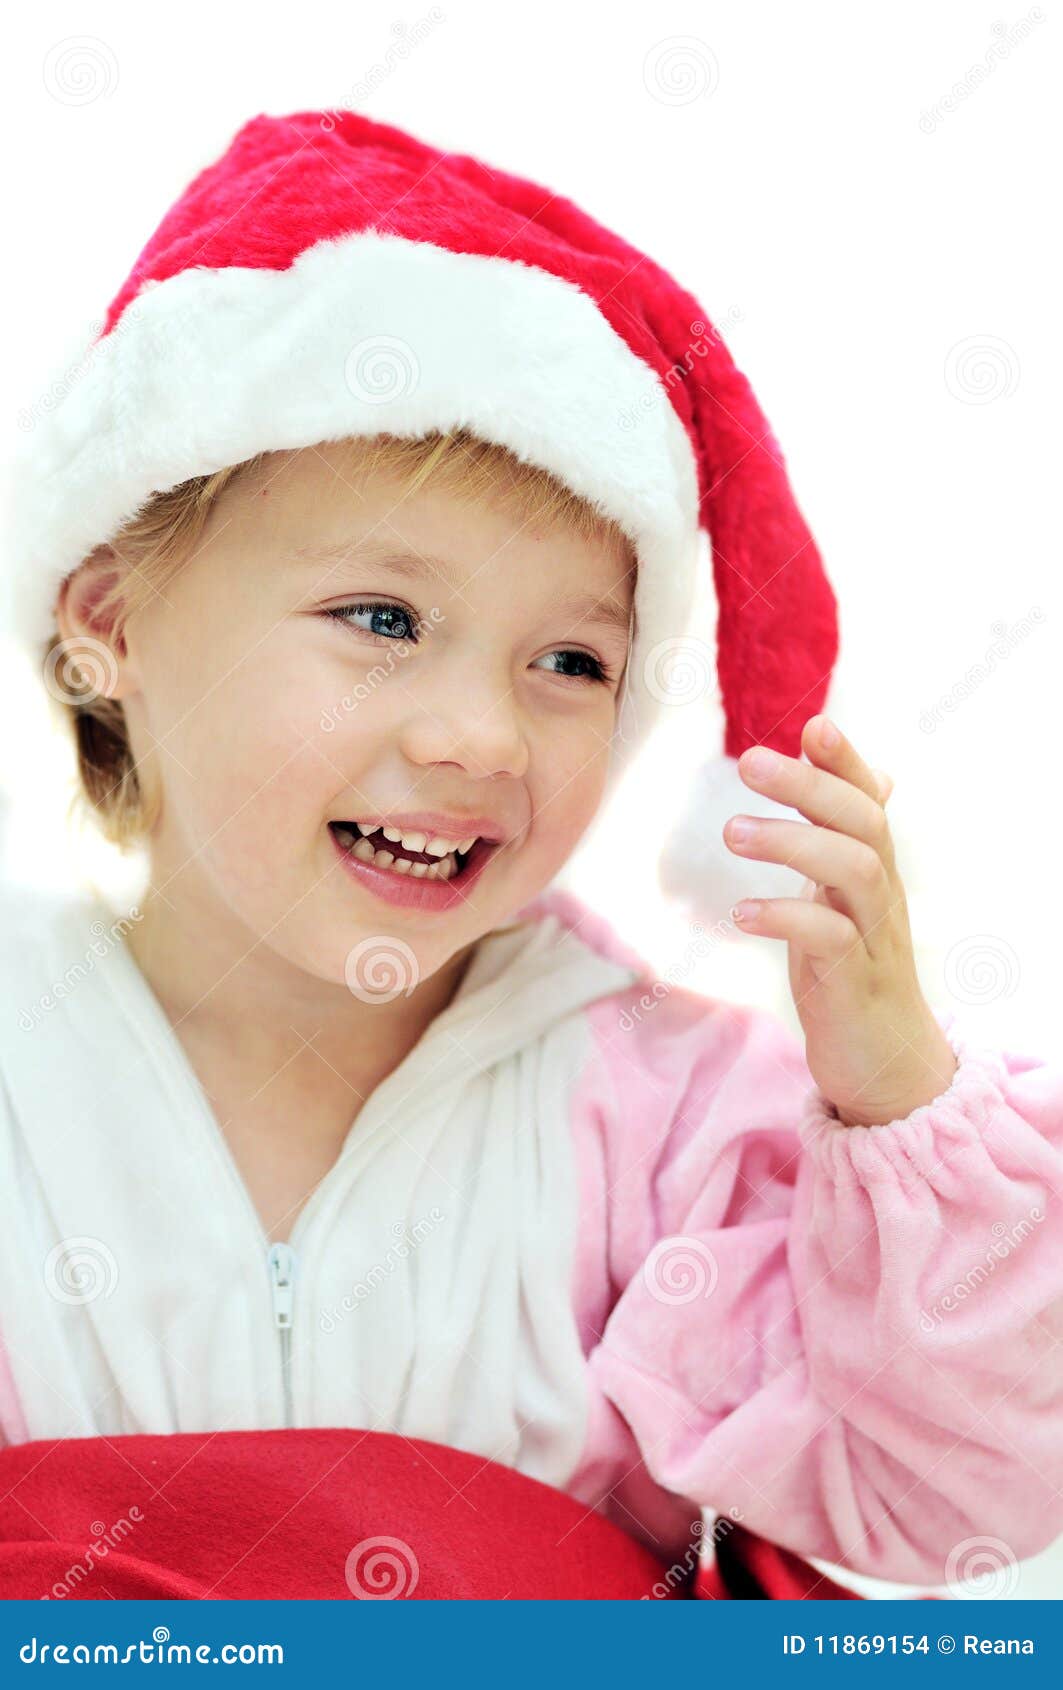 Funny Santa girl stock photo. Image of december, holiday - 11869154